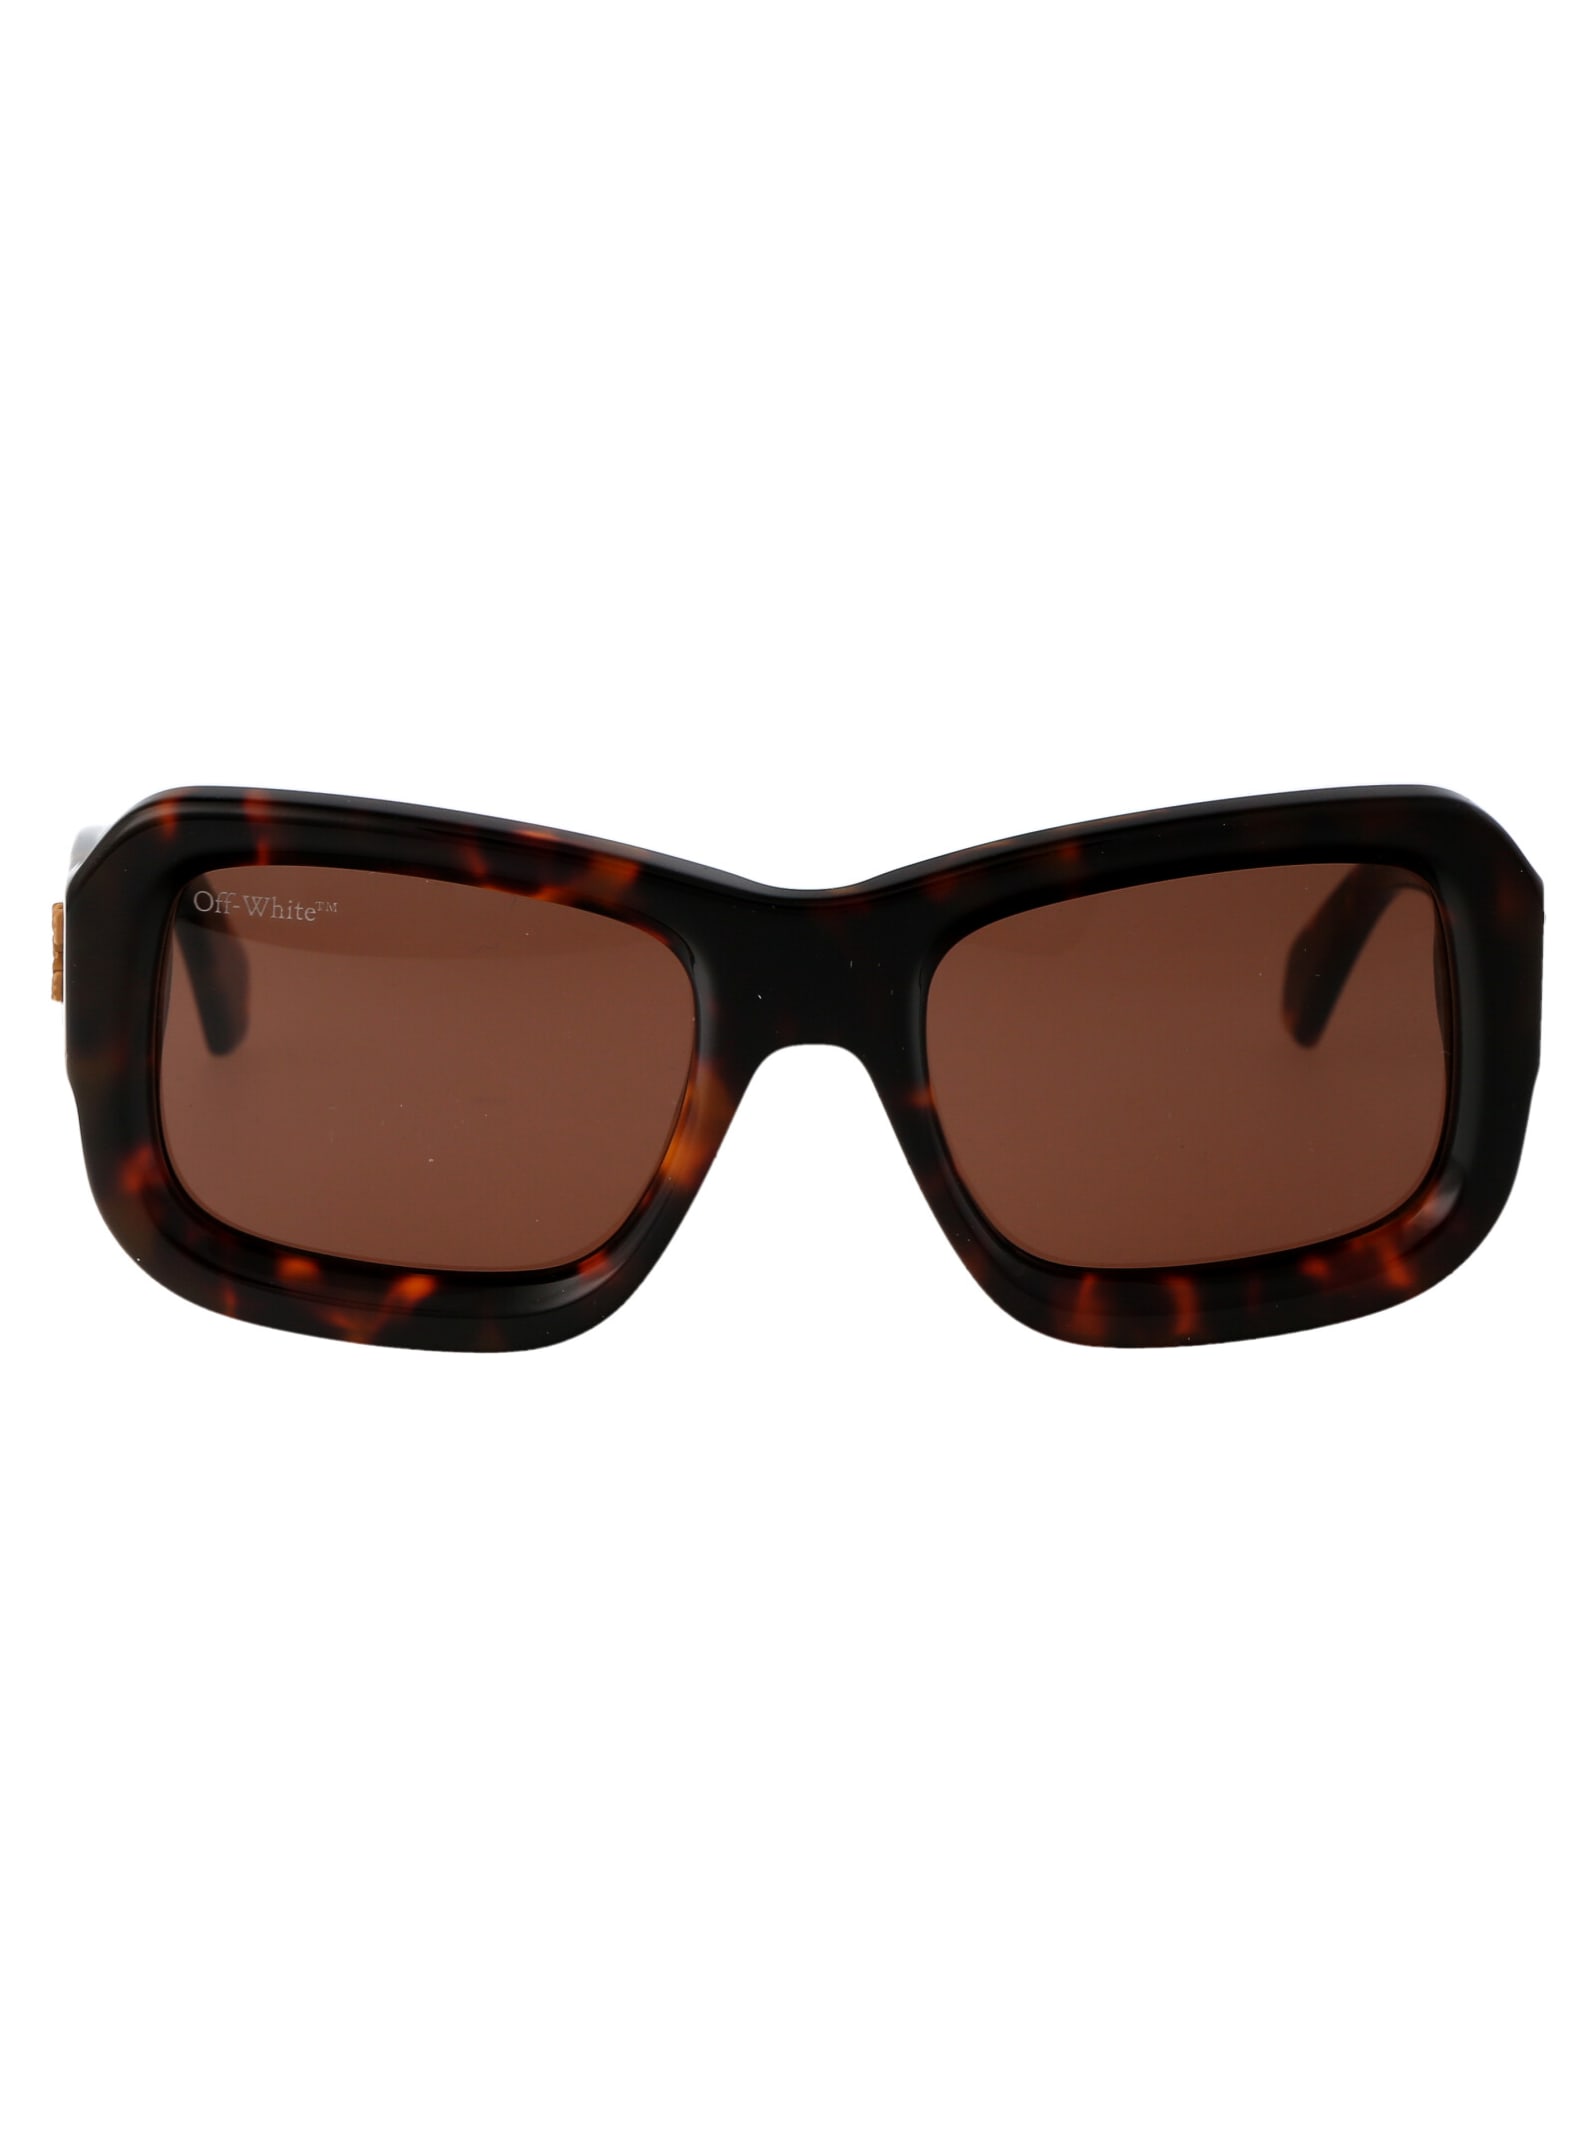 Off-white Verona Sunglasses In 6064 Havana